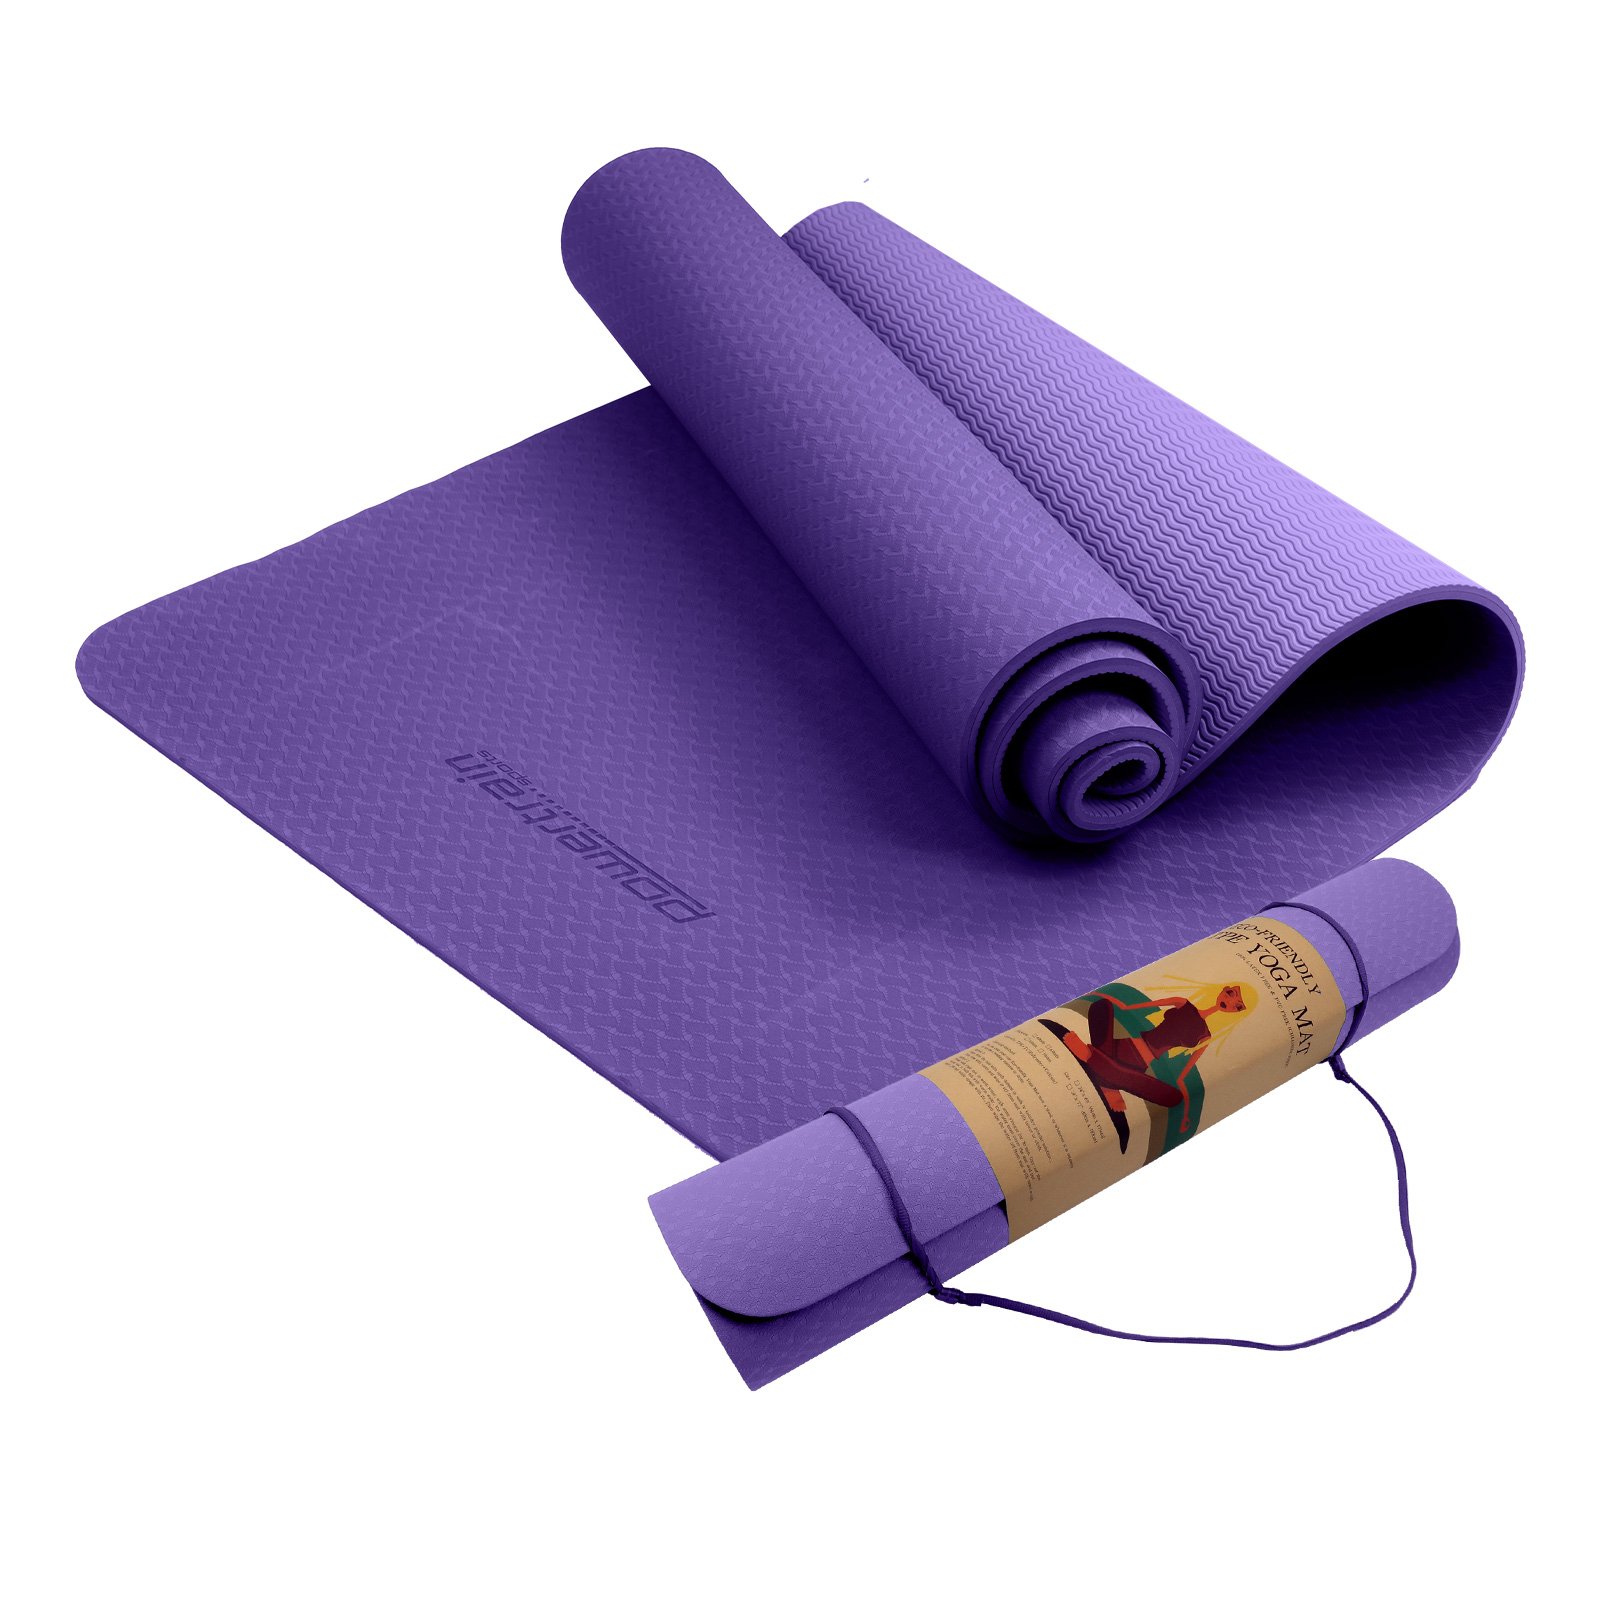 Powertrain Eco-Friendly TPE Yoga Pilates Exercise Mat 6mm - Lilac 2